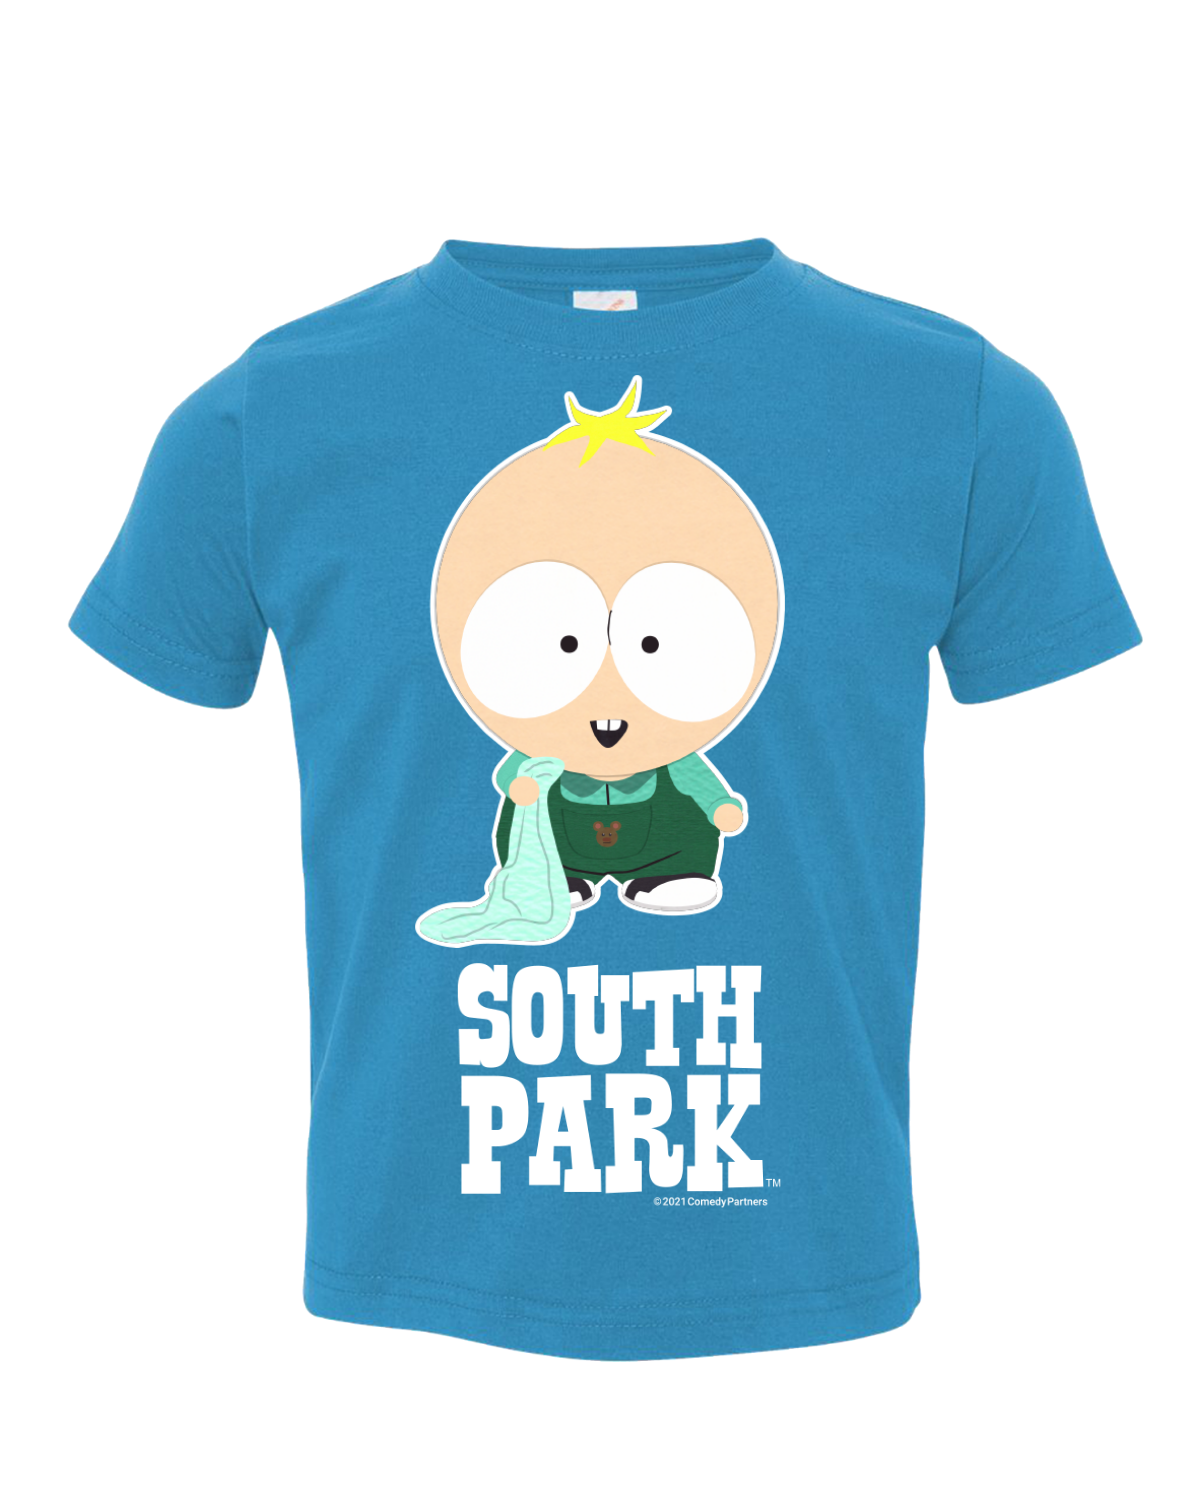 South Park Baby Butter Kids/Toddler T-Shirt